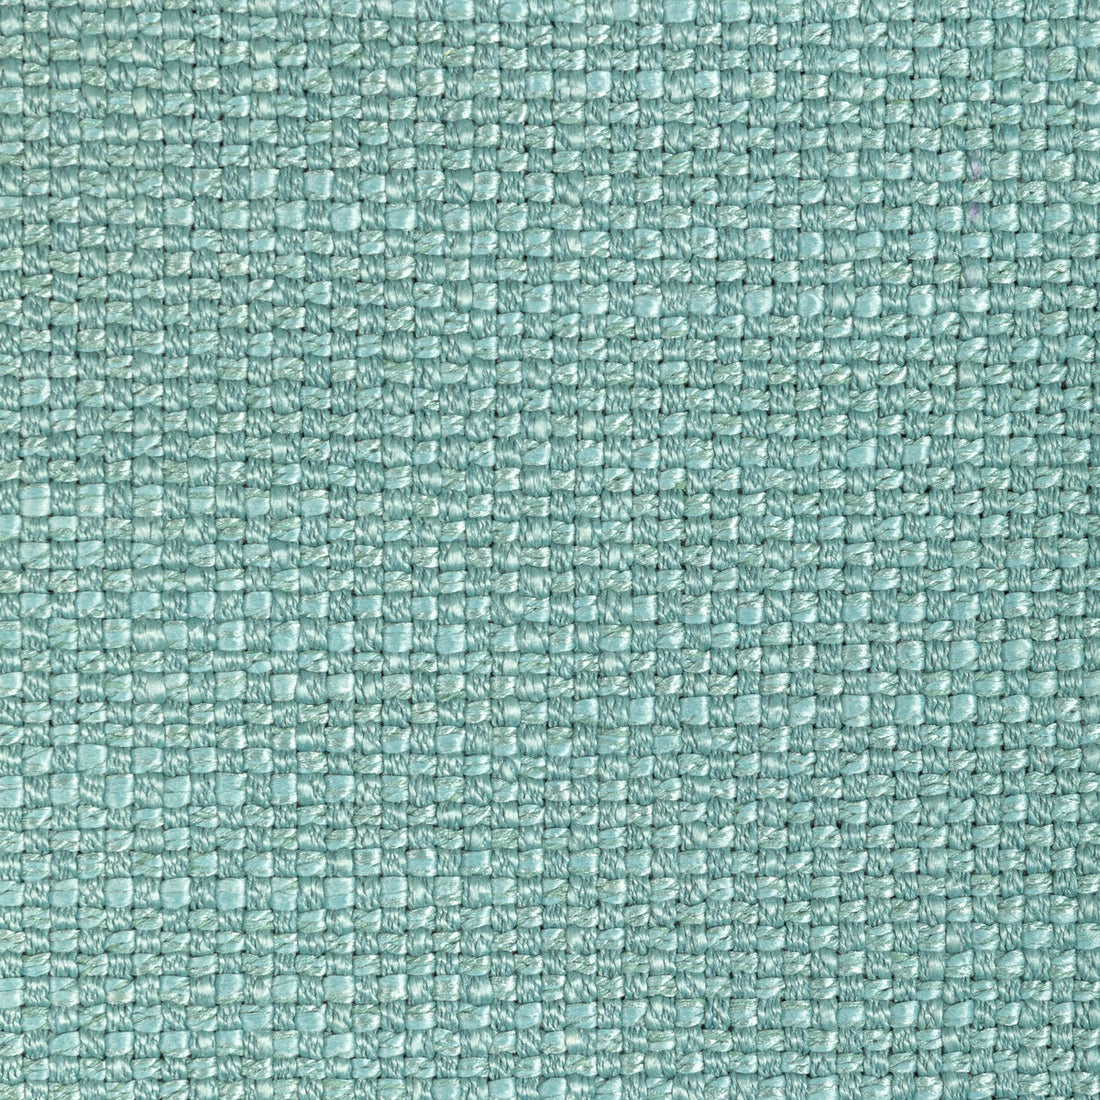 Kravet Design fabric in 36594-13 color - pattern 36594.13.0 - by Kravet Design in the Performance Kravetarmor collection